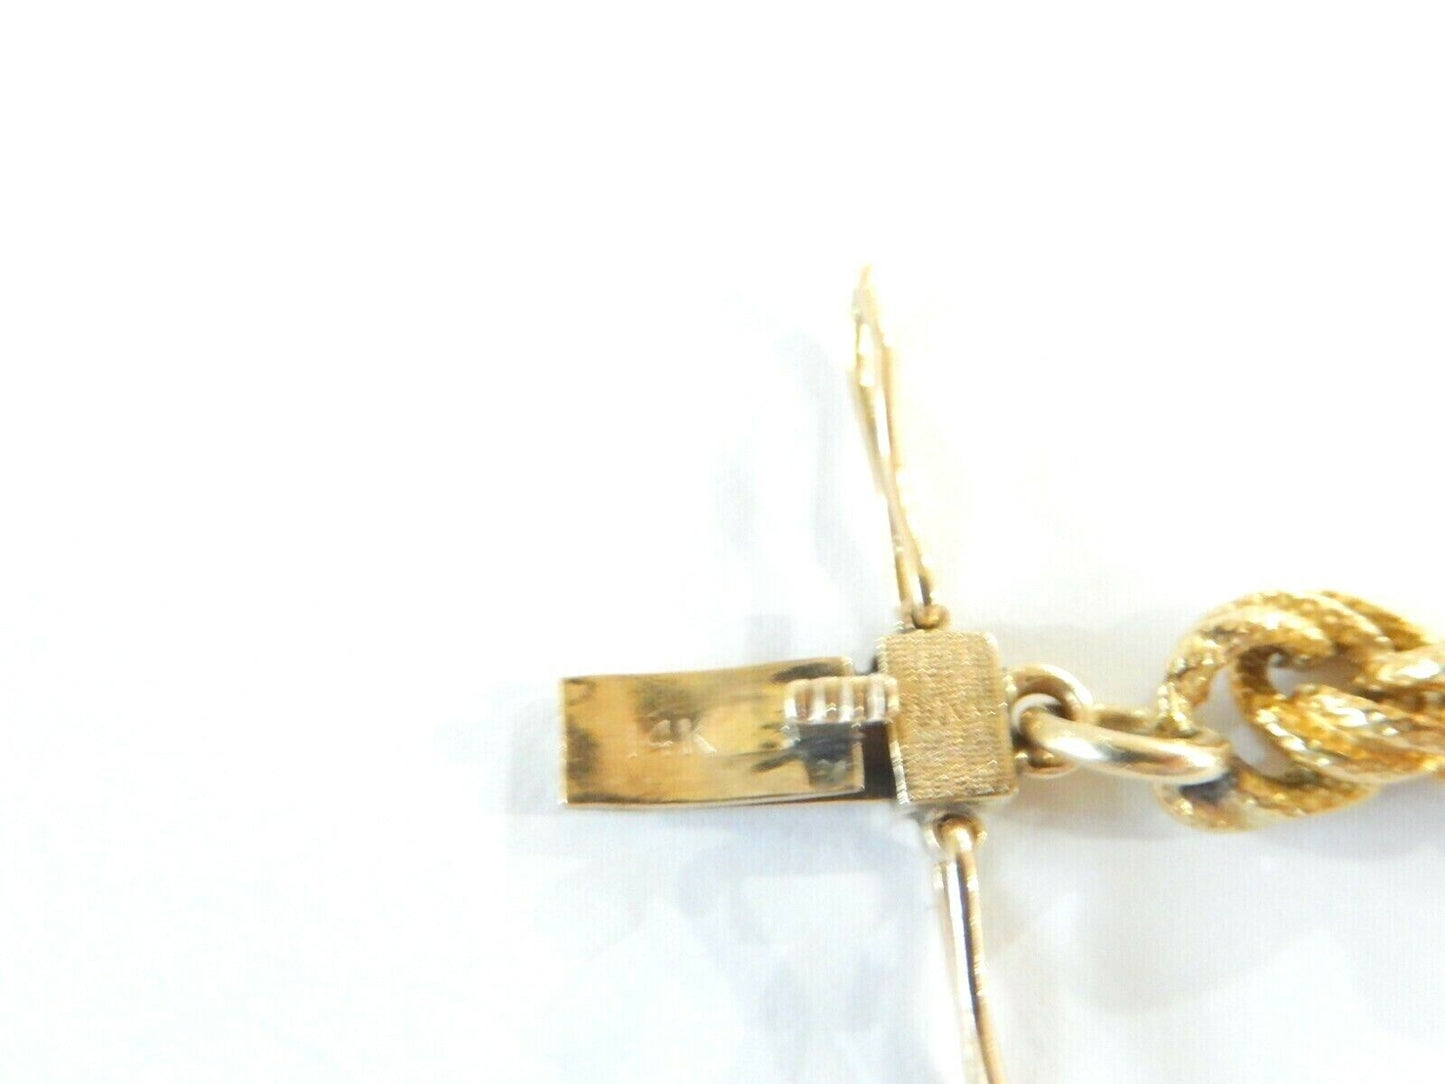 *VINTAGE*  14K YELLOW GOLD  7.25" 6.5mm  Rope Bracelet: 1.8 Grams